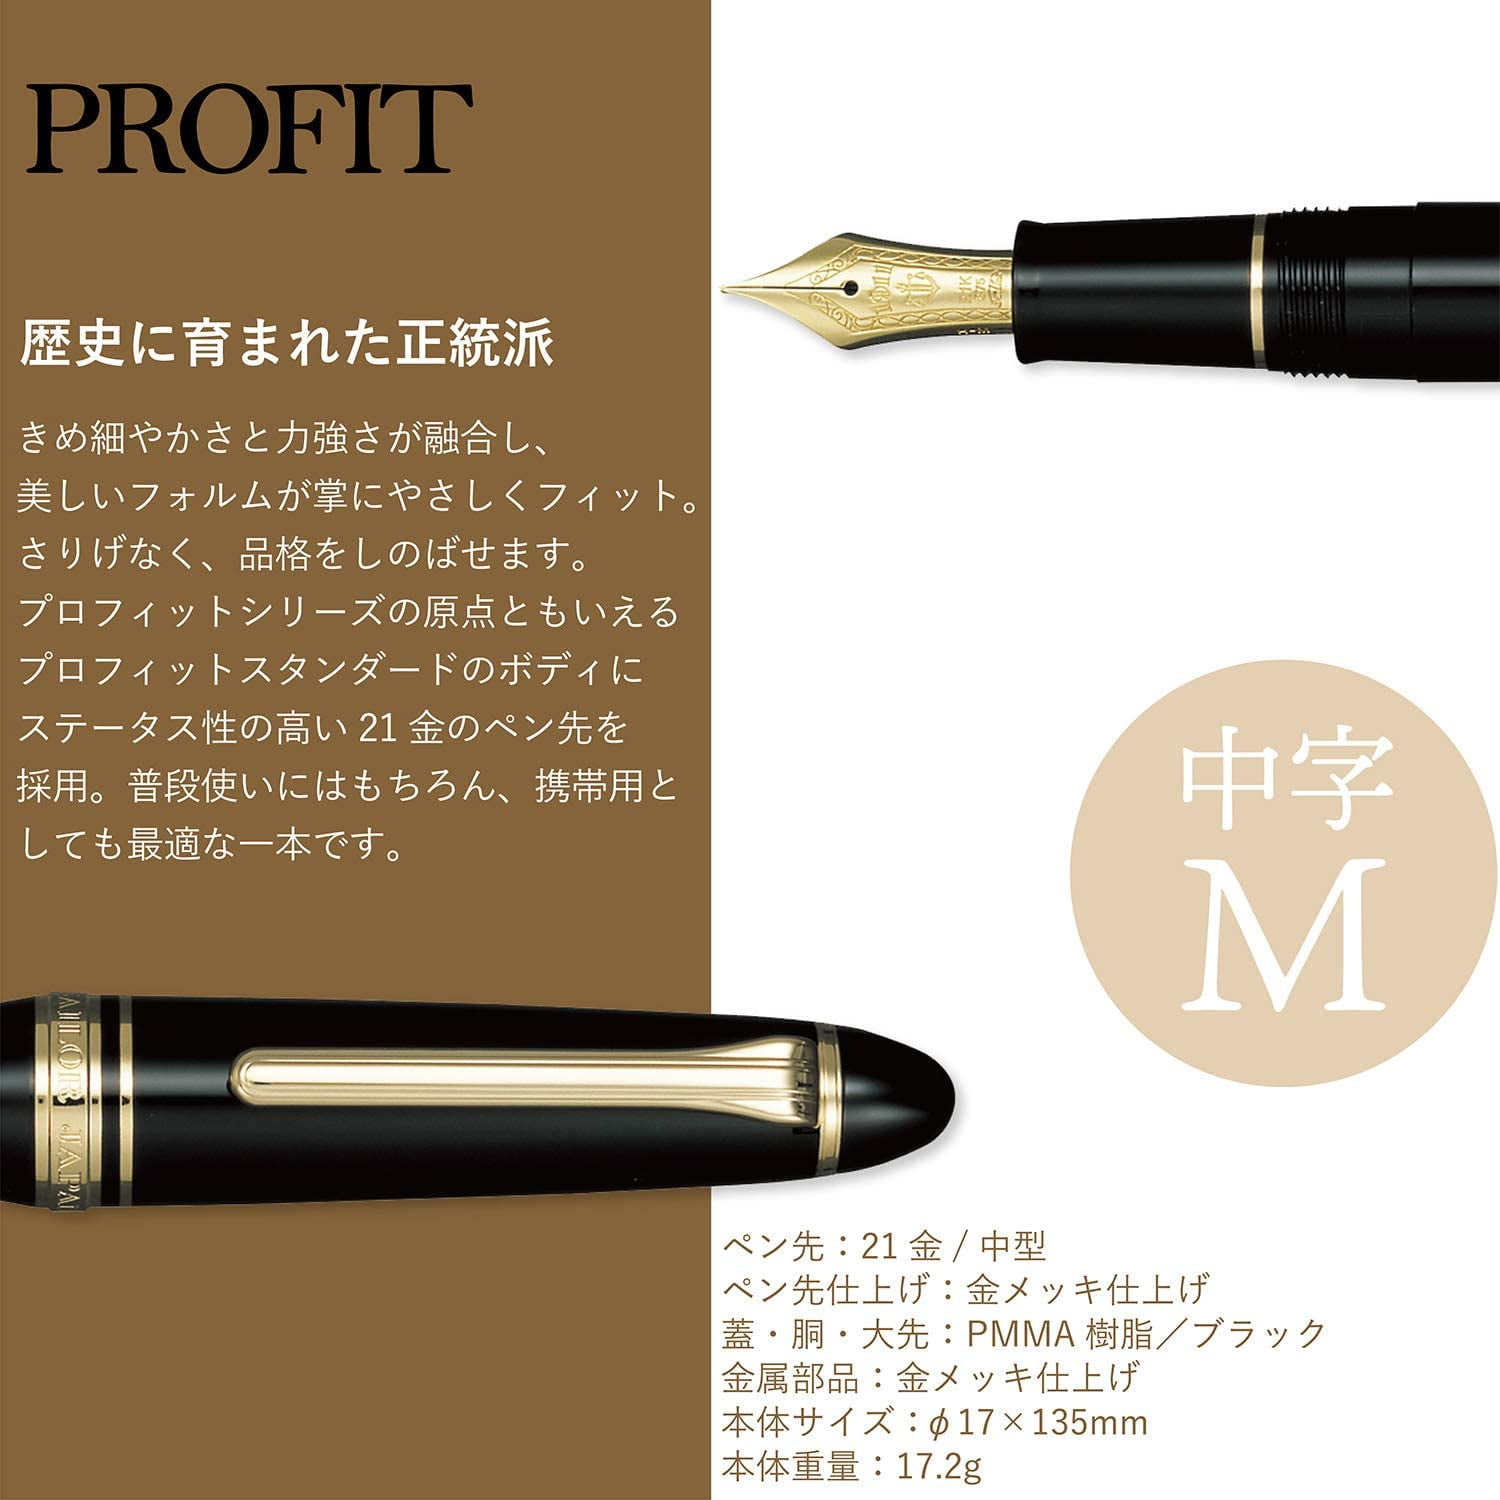 Paper Mate Pro Fit Profit Pen M Medium Point Ballpoint 